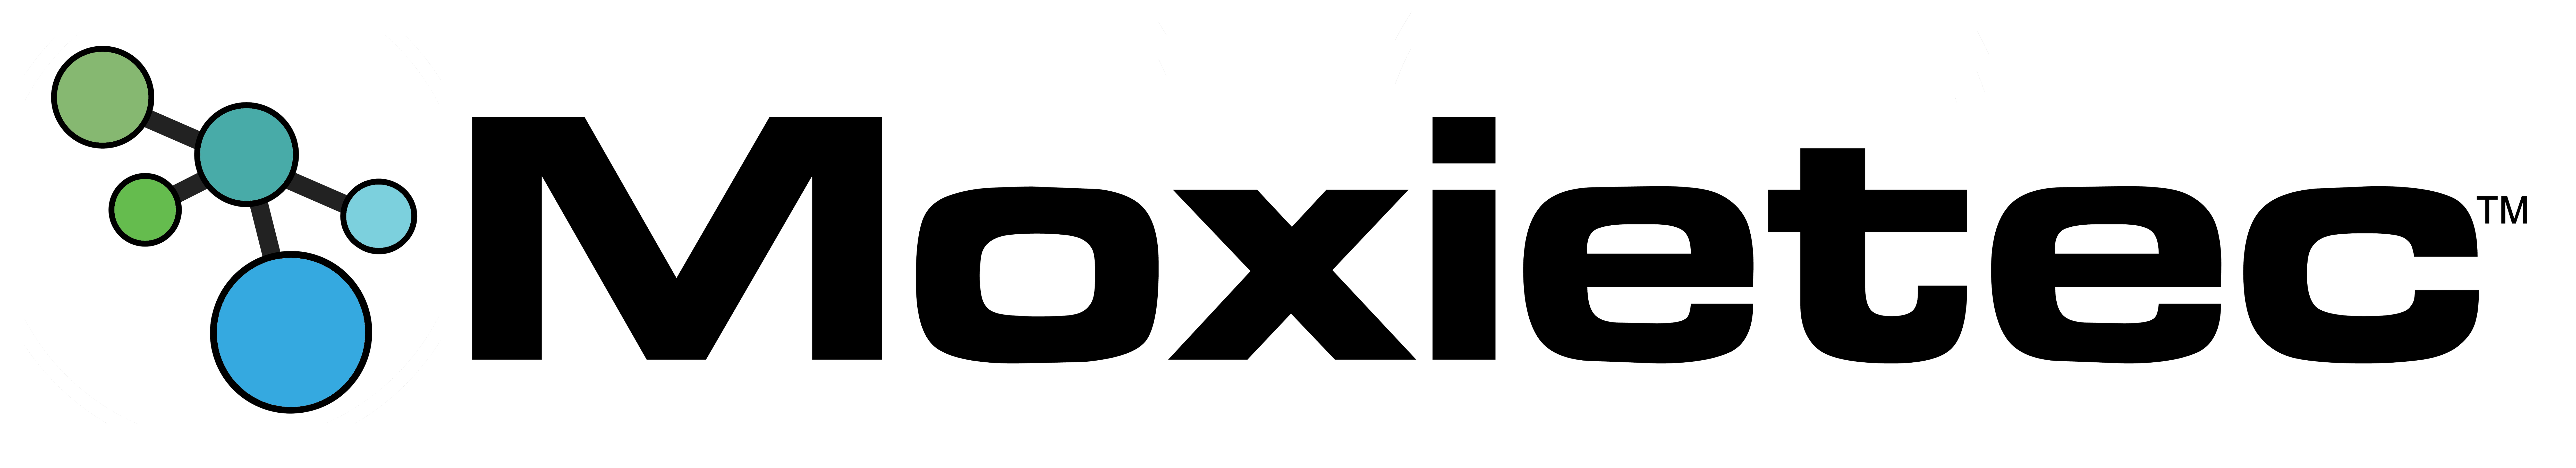 Moxitec logo sponsors of Foam Expo